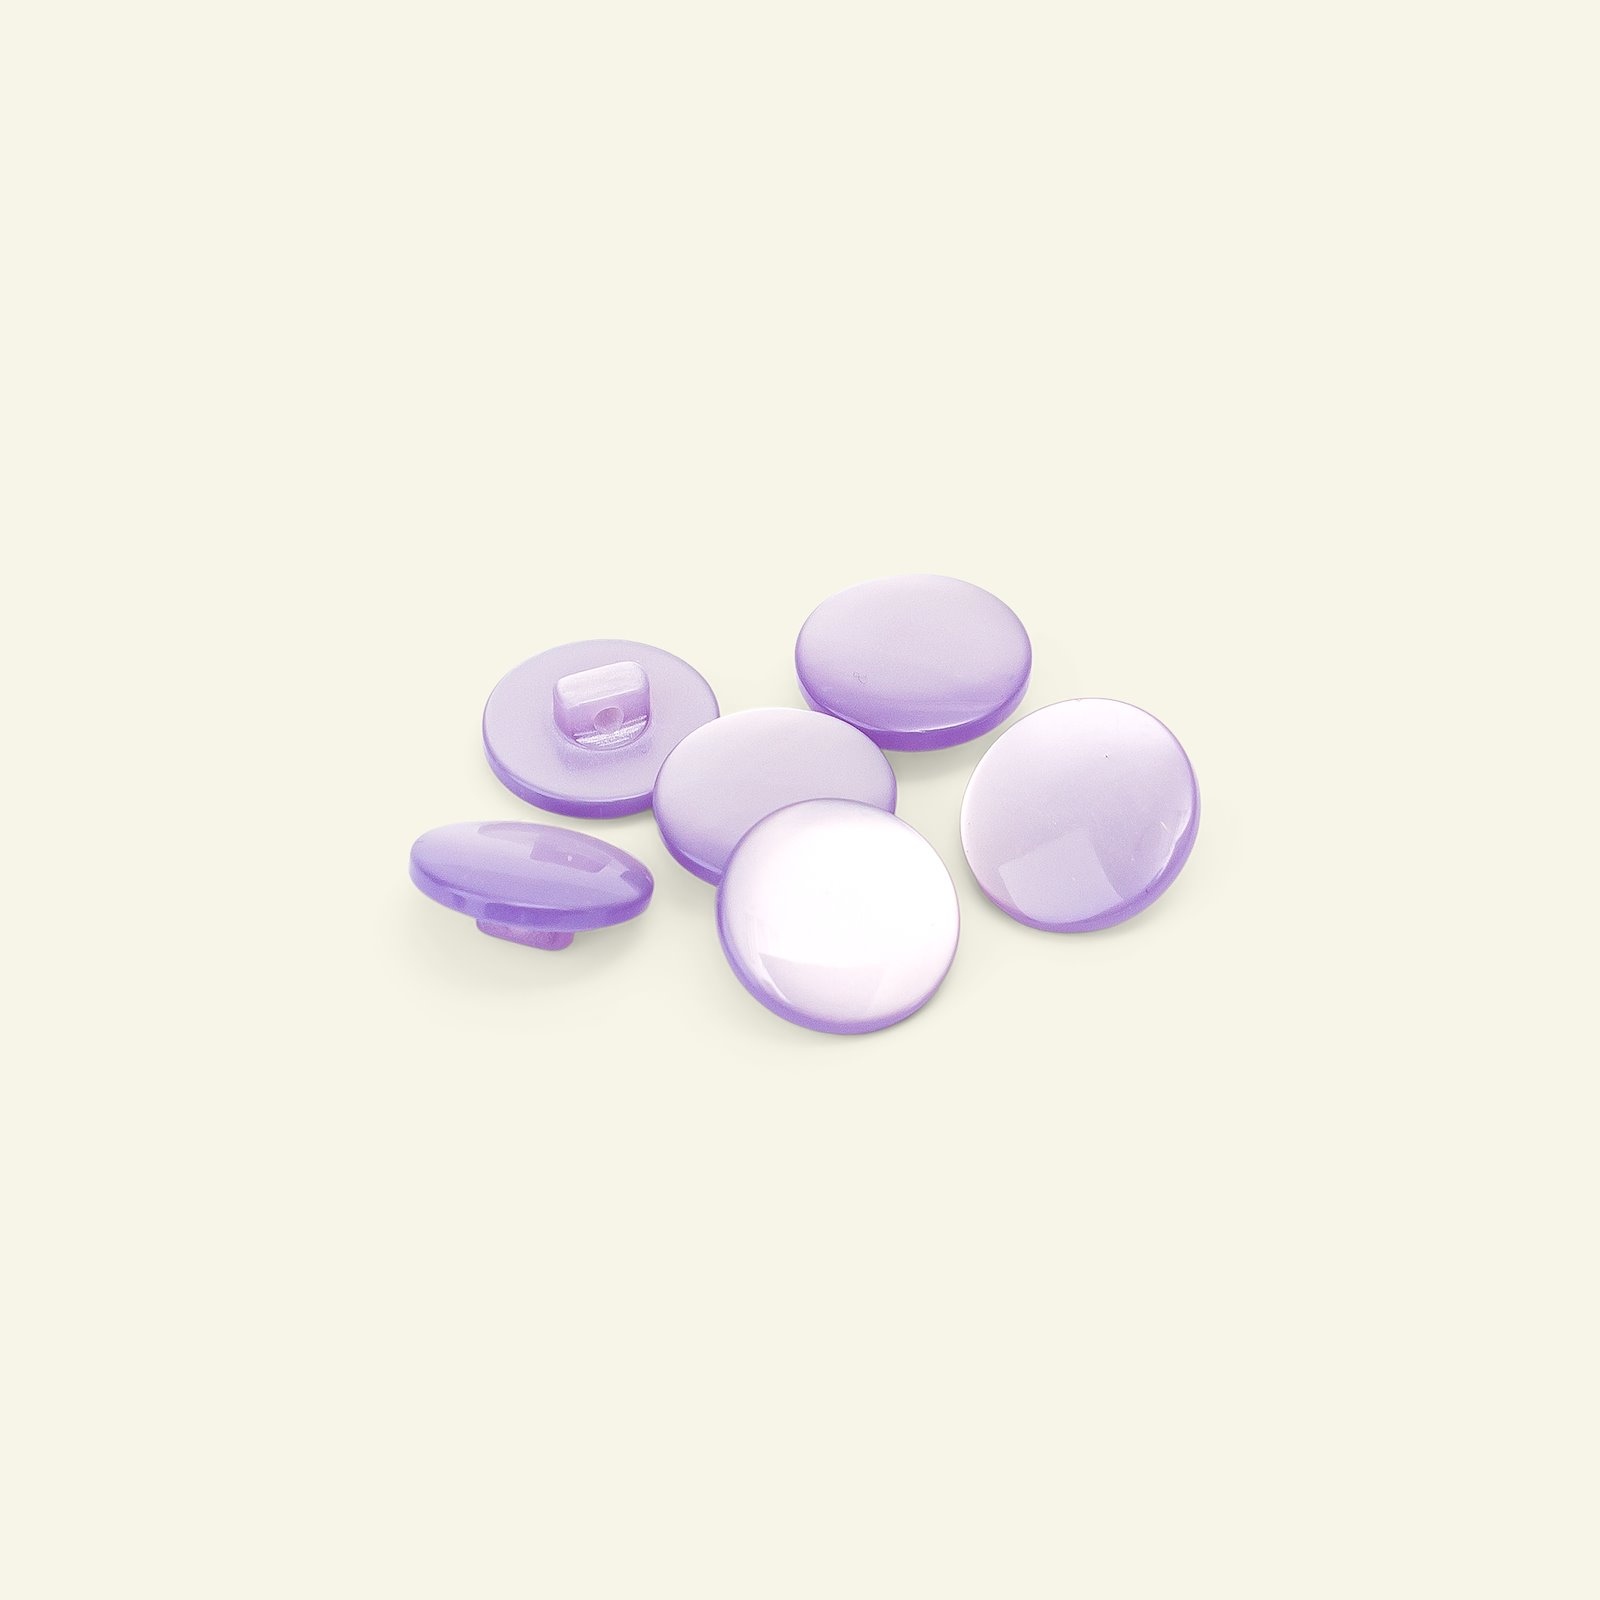 Shank button shiny 15mm purple 6pcs 33335_pack